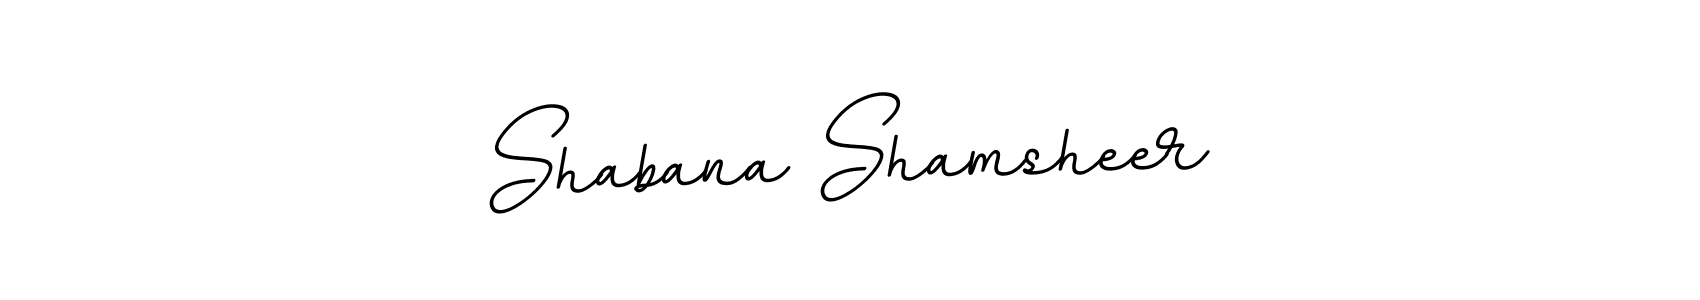 How to Draw Shabana Shamsheer signature style? BallpointsItalic-DORy9 is a latest design signature styles for name Shabana Shamsheer. Shabana Shamsheer signature style 11 images and pictures png